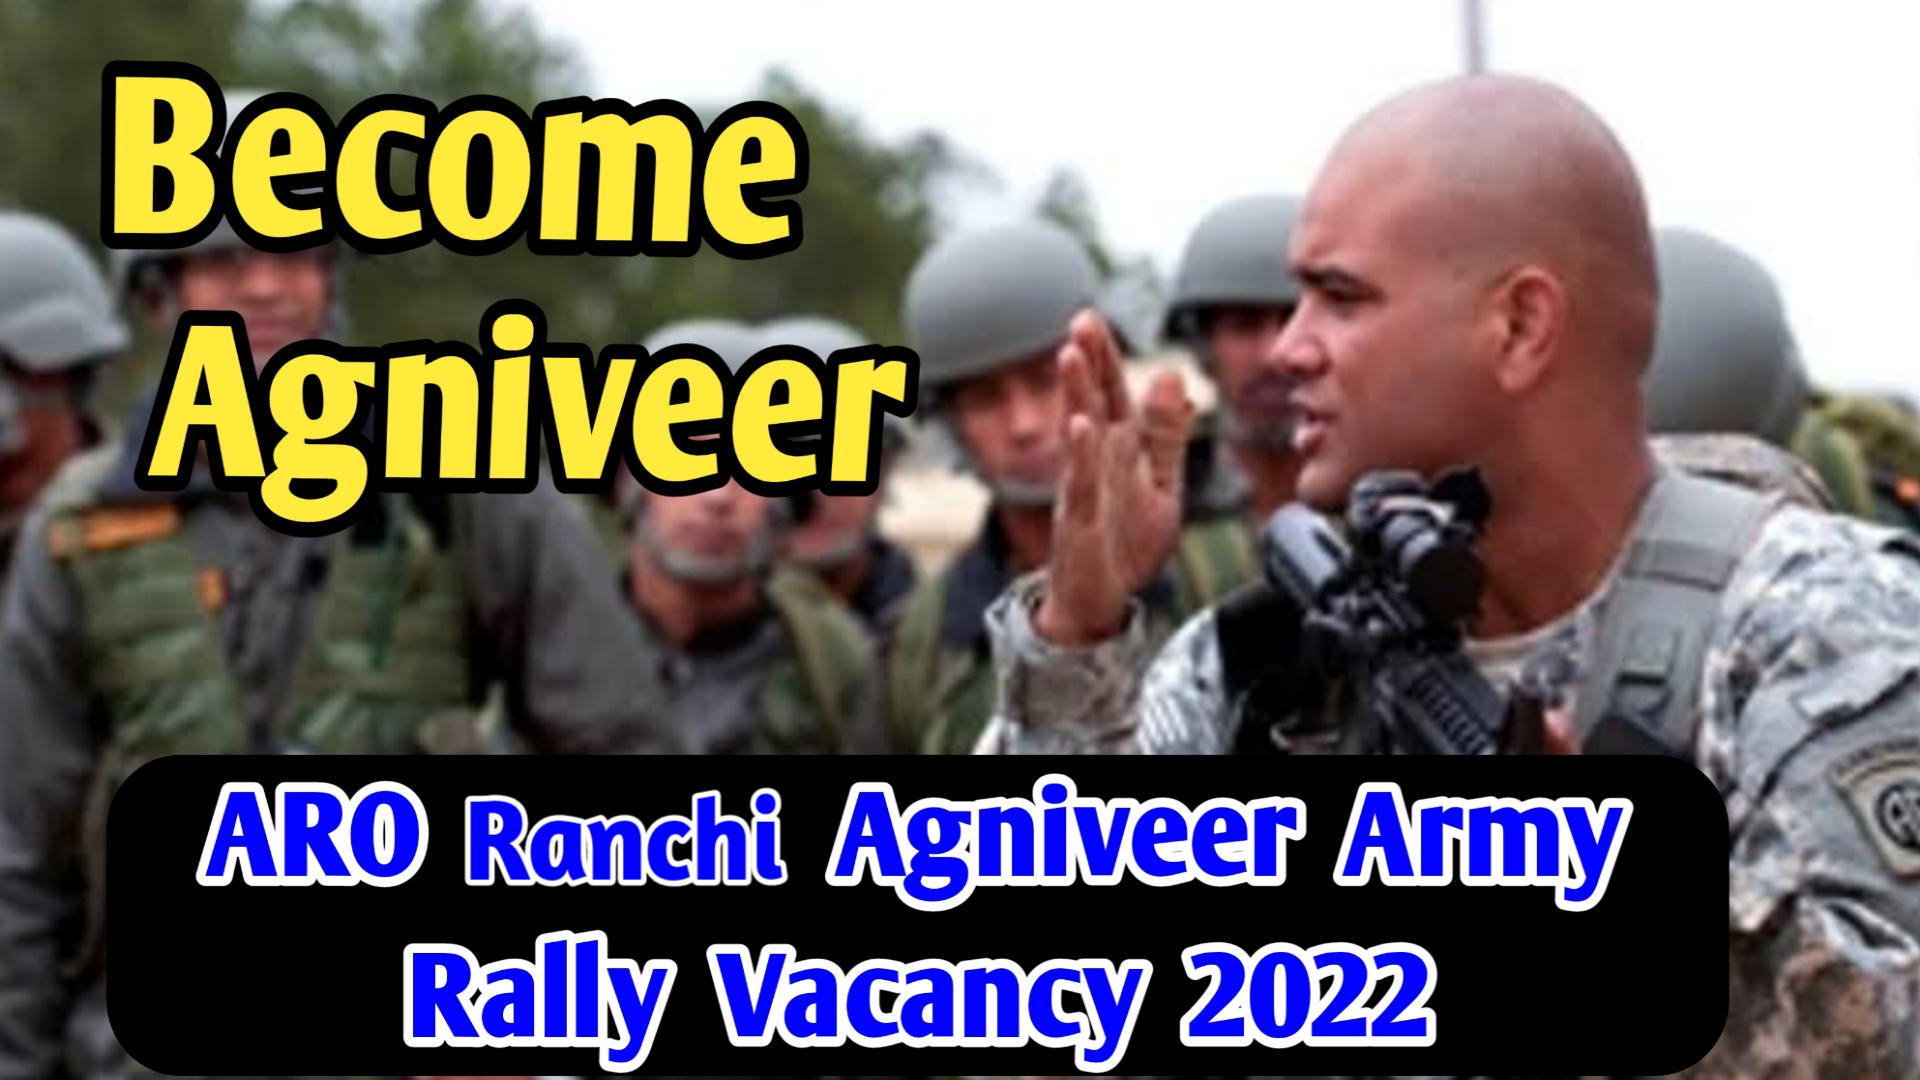 ARO Ranchi Agniveer Army Rally Vacancy 2022